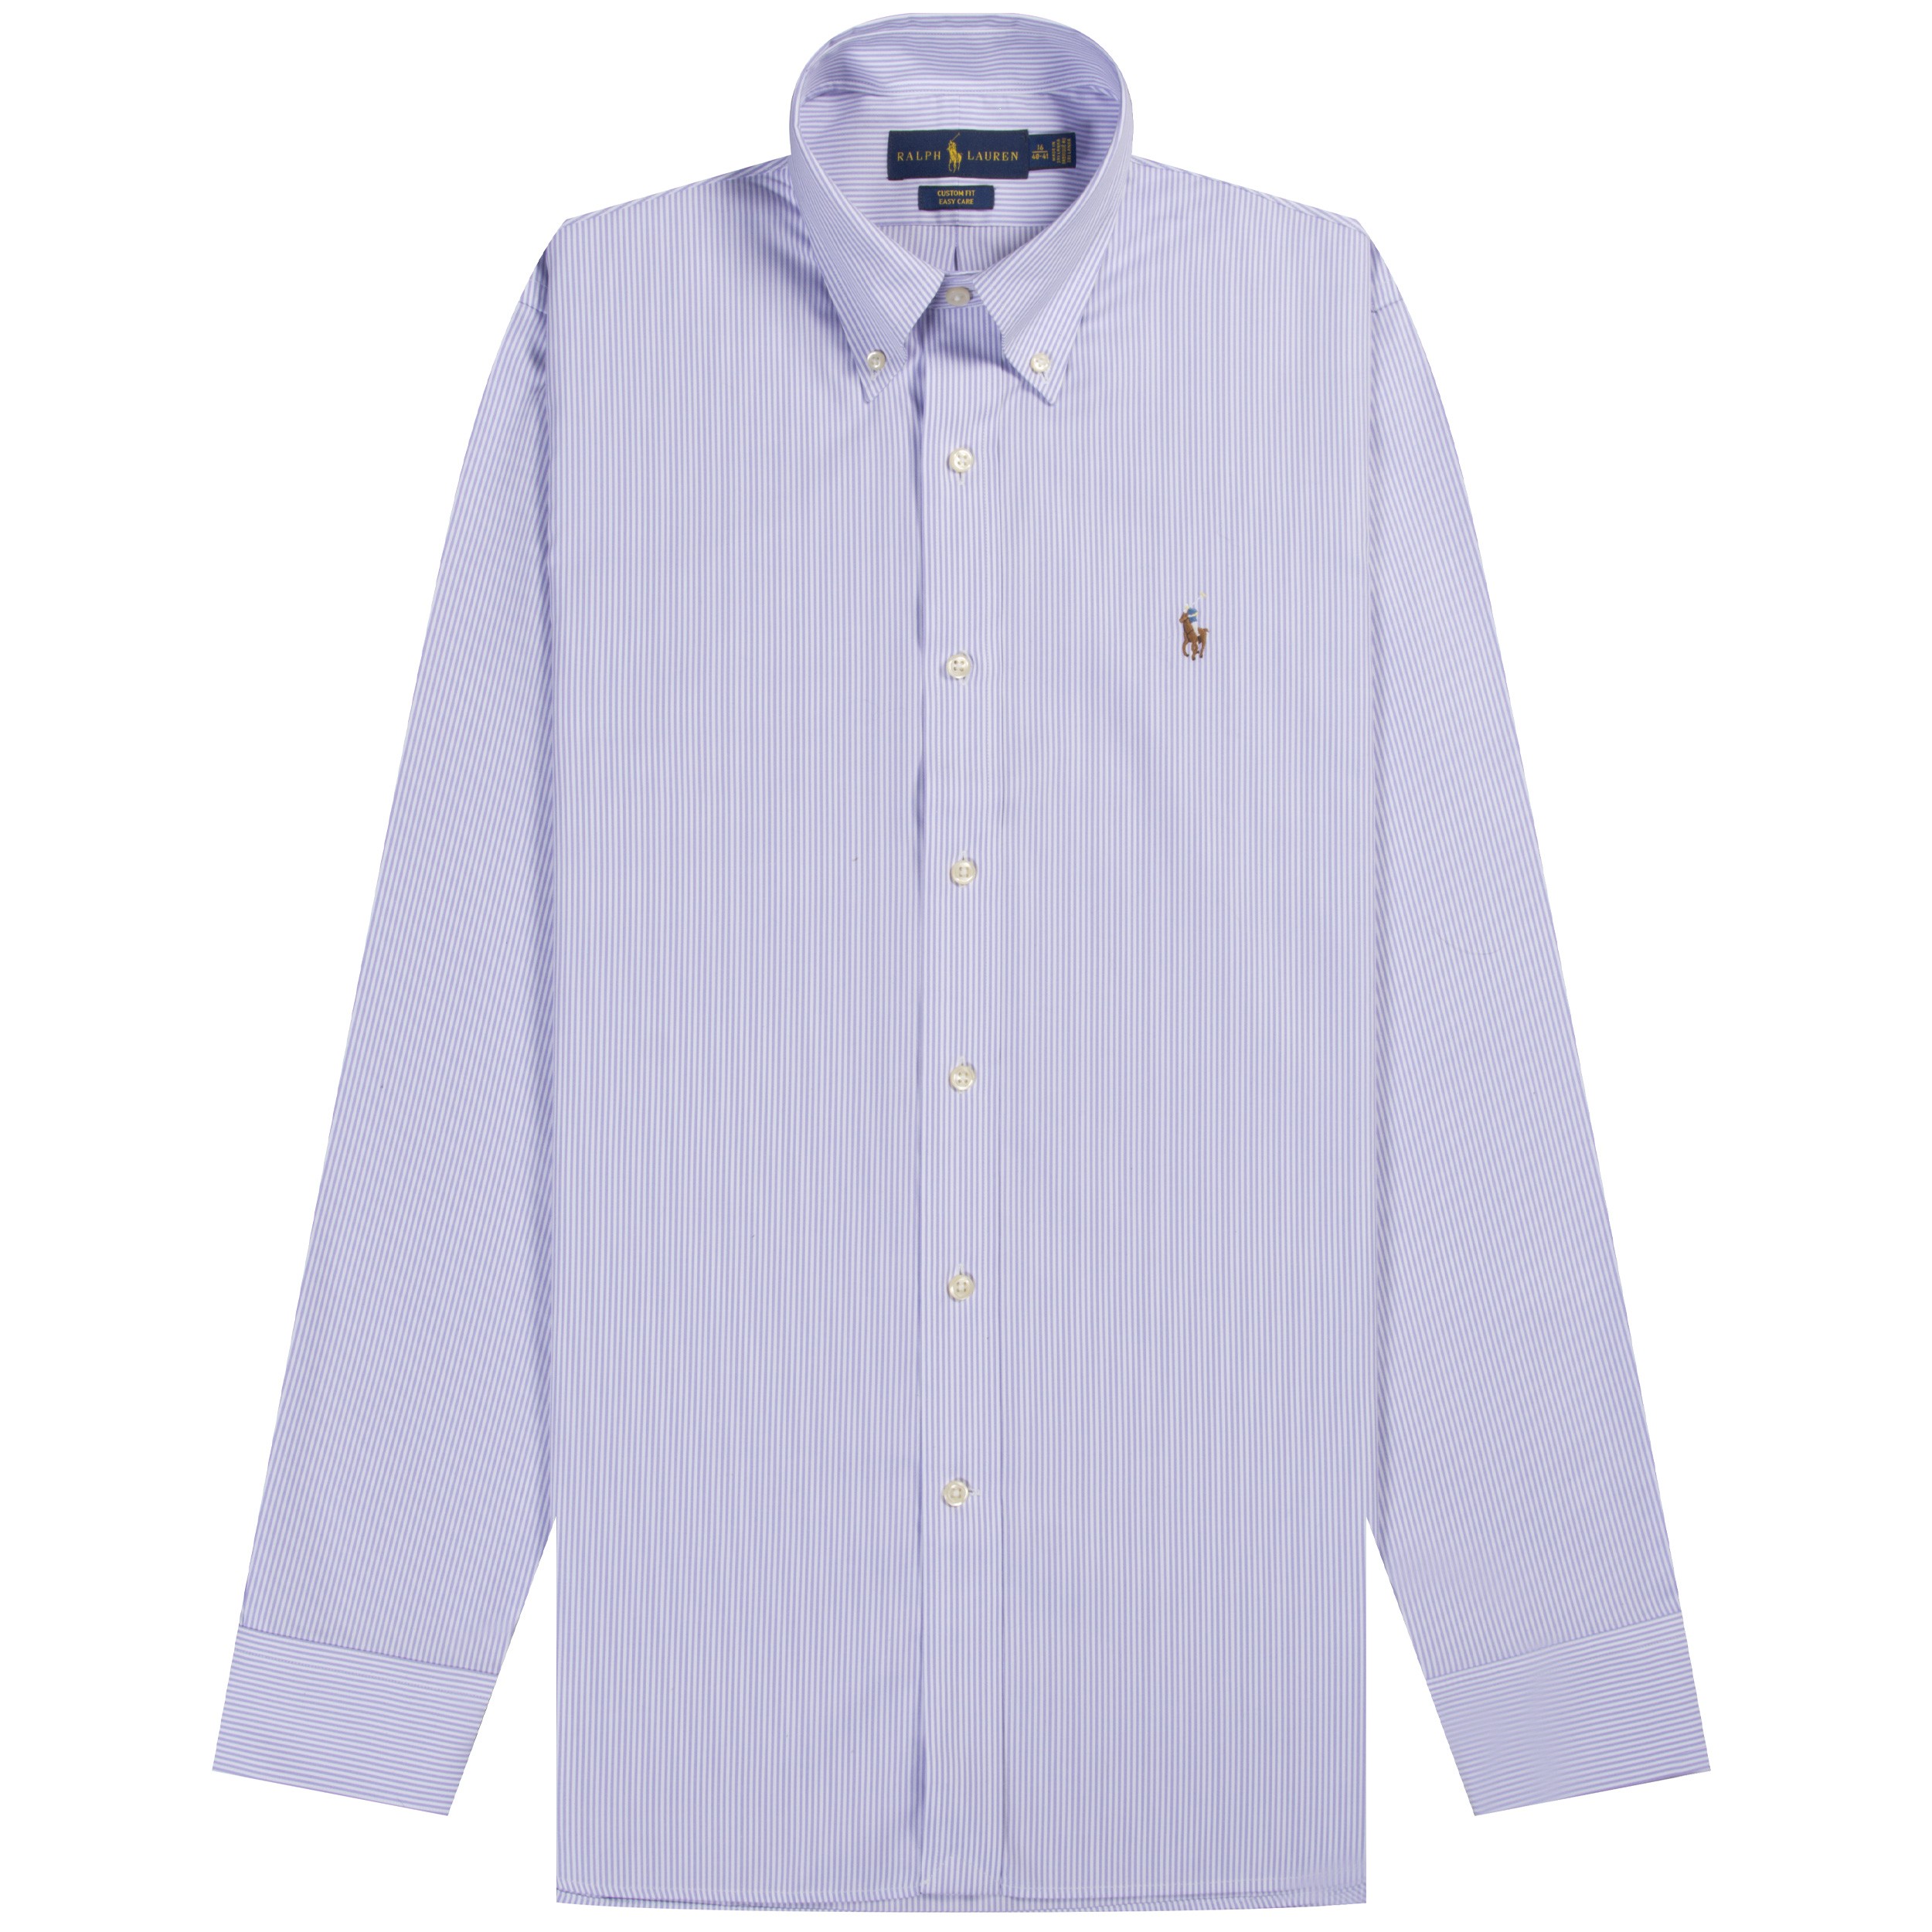 Polo Ralph Lauren 'Custom Fit' Striped Dress Shirt Purple/White